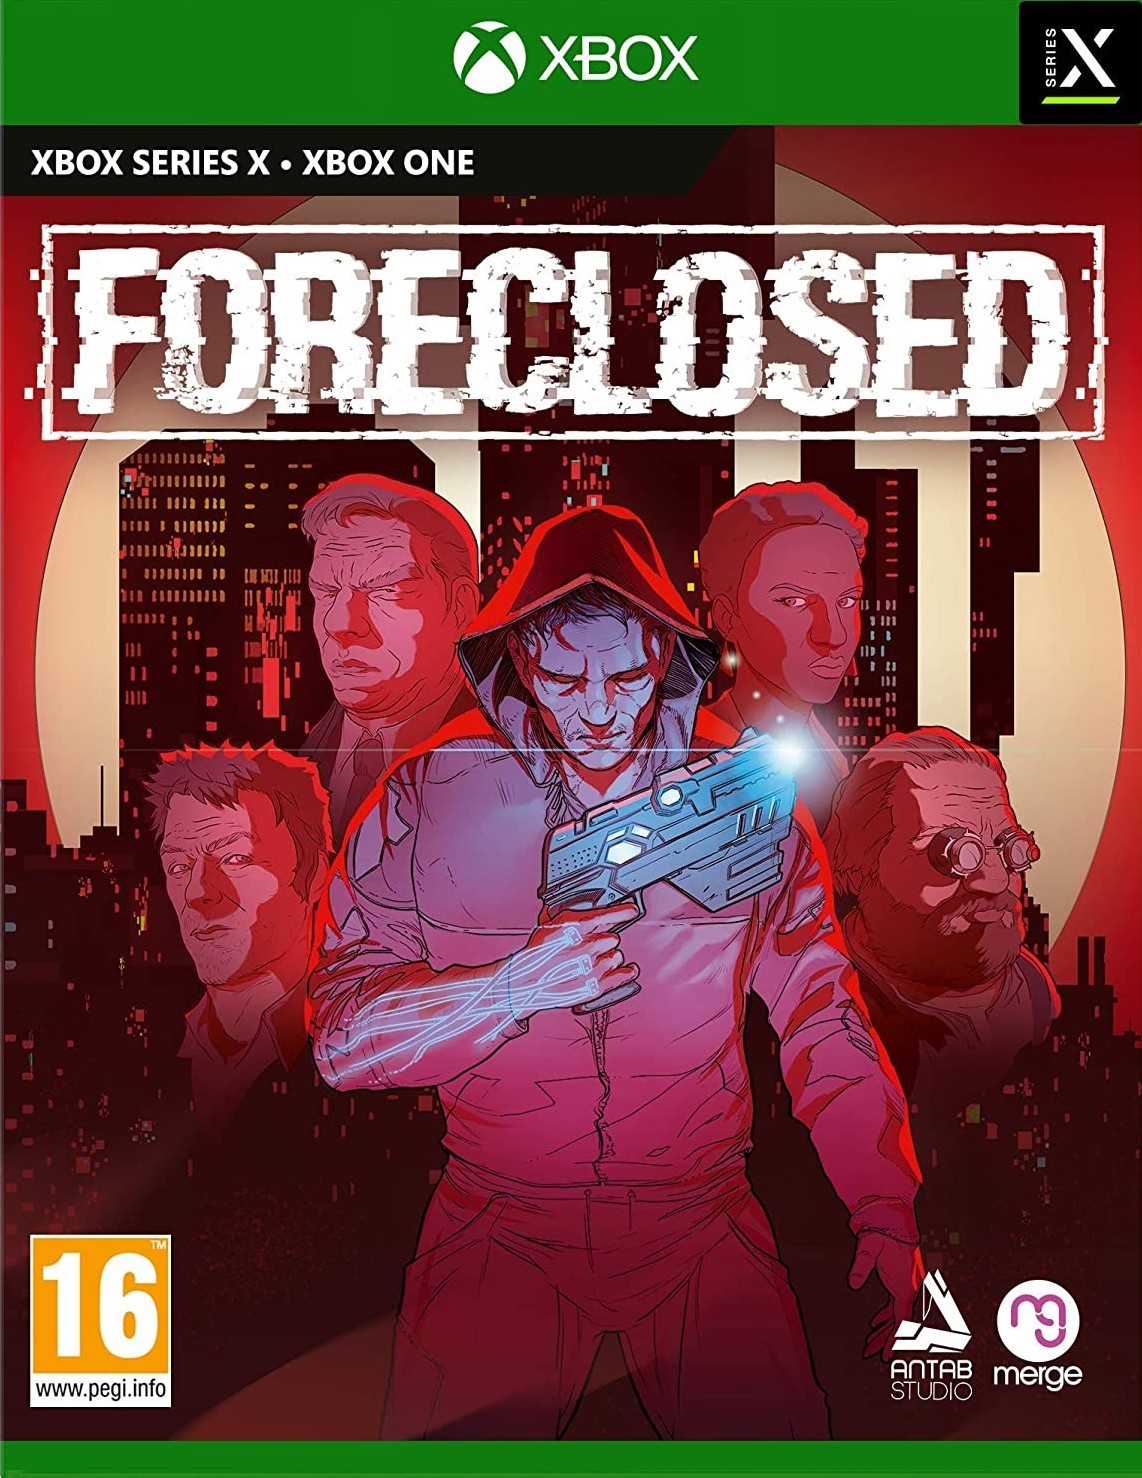 Foreclosed (Xbox One), Antab Studio